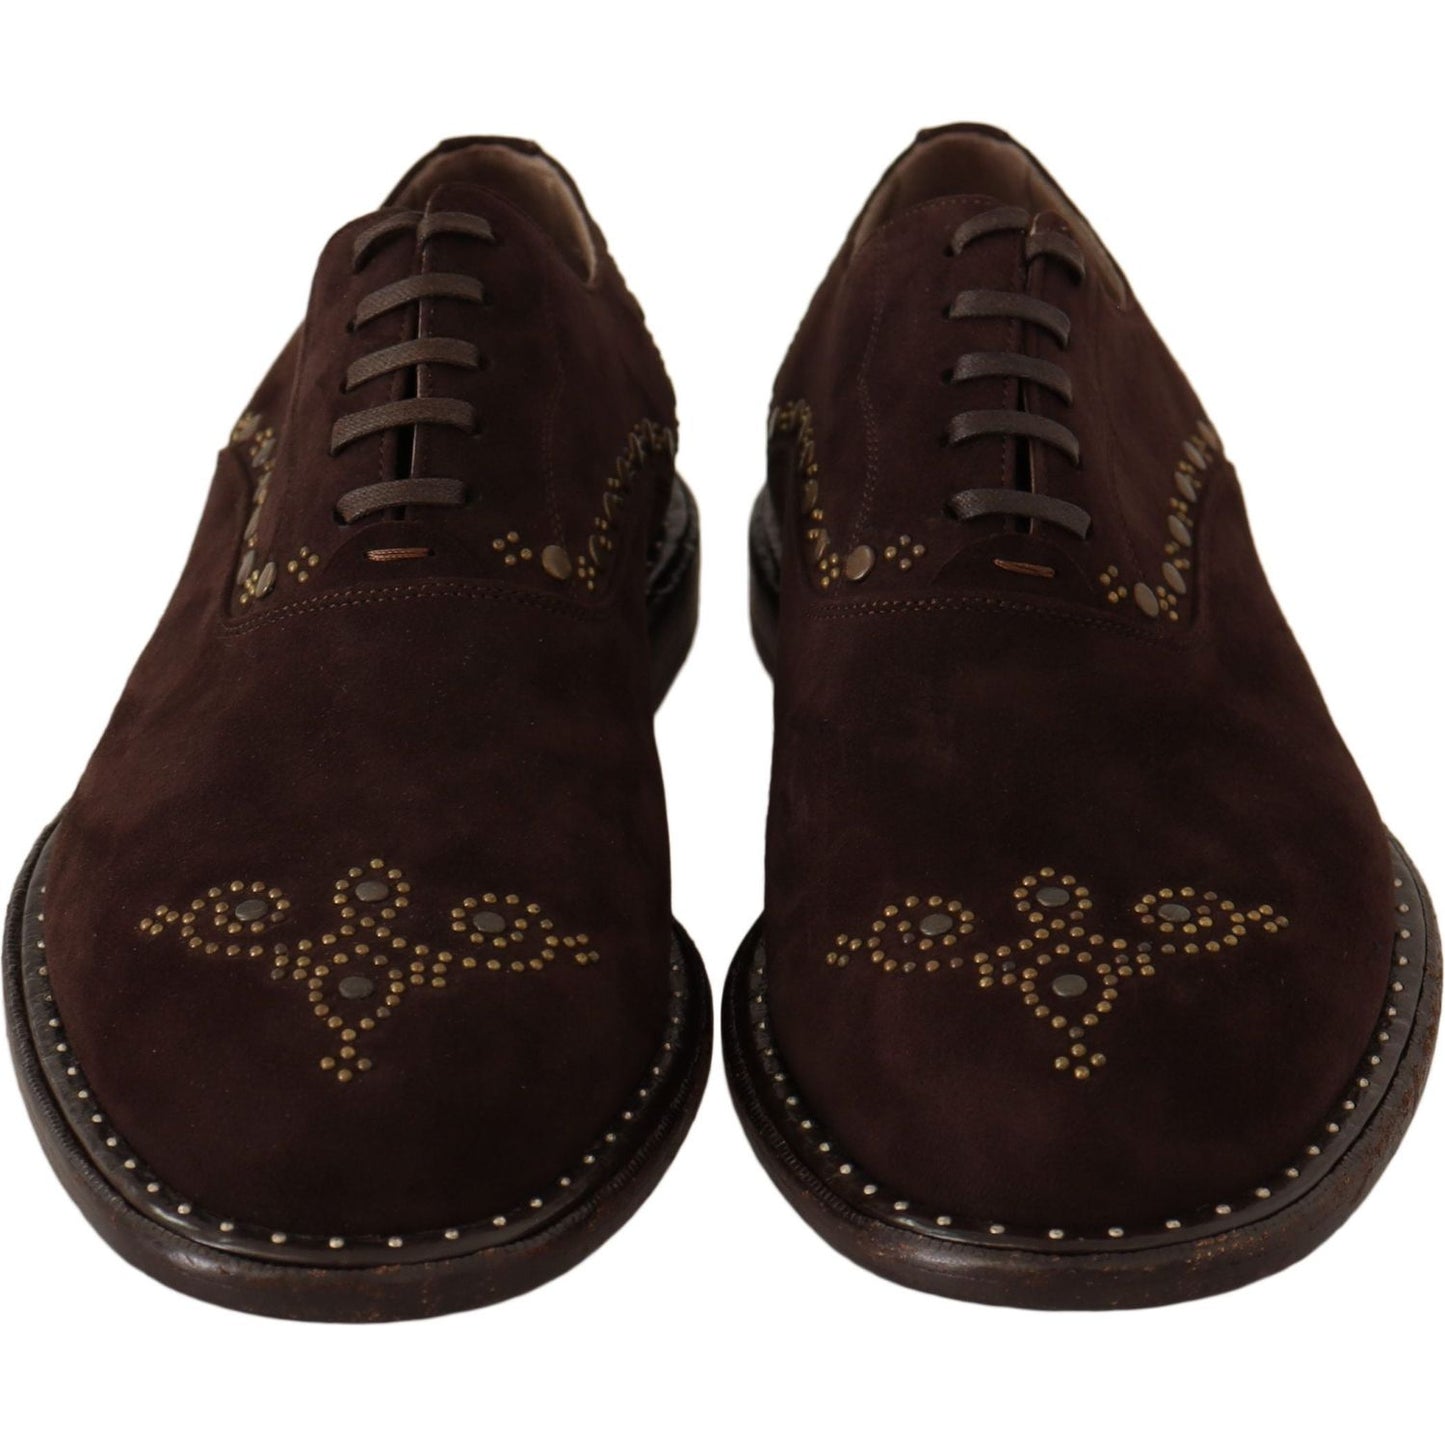 Dolce & Gabbana Elegant Brown Suede Studded Derby Shoes brown-suede-marsala-derby-studded-shoes Dress Shoes IMG_0018-scaled-4abdae0e-ae5.jpg